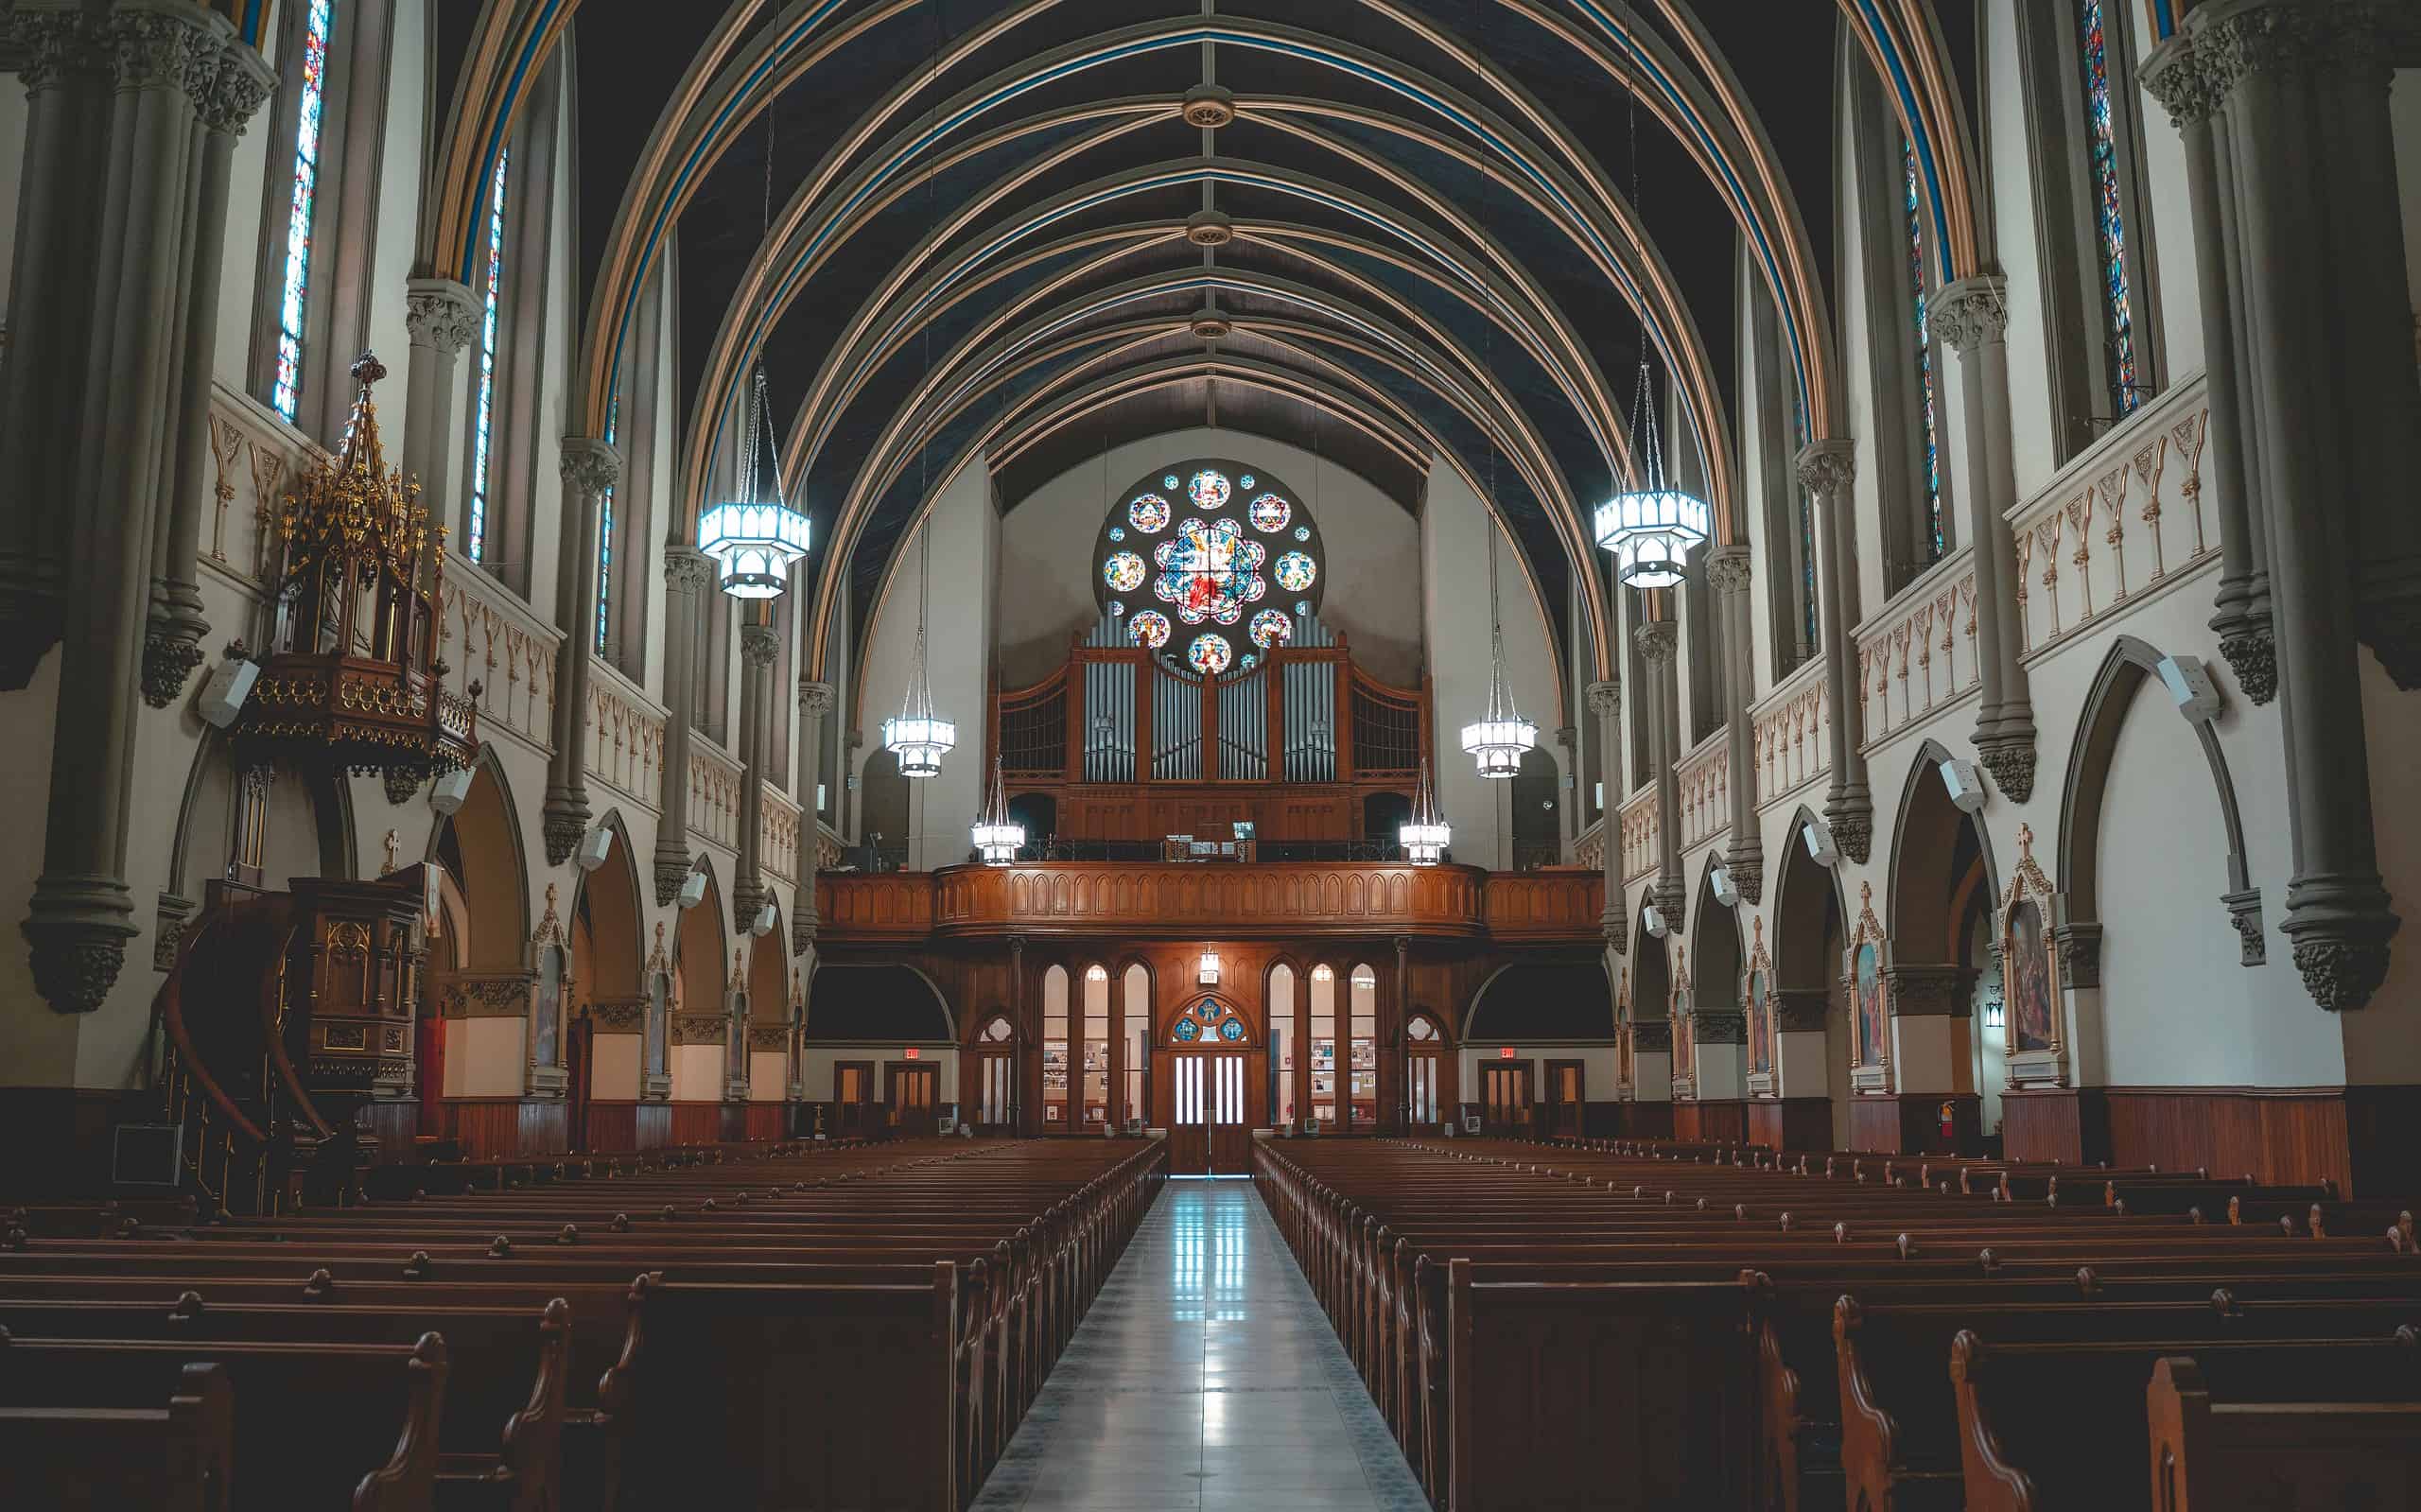 The interior of Saint John the Evangelist catholic church in Indianapolis, Indiana